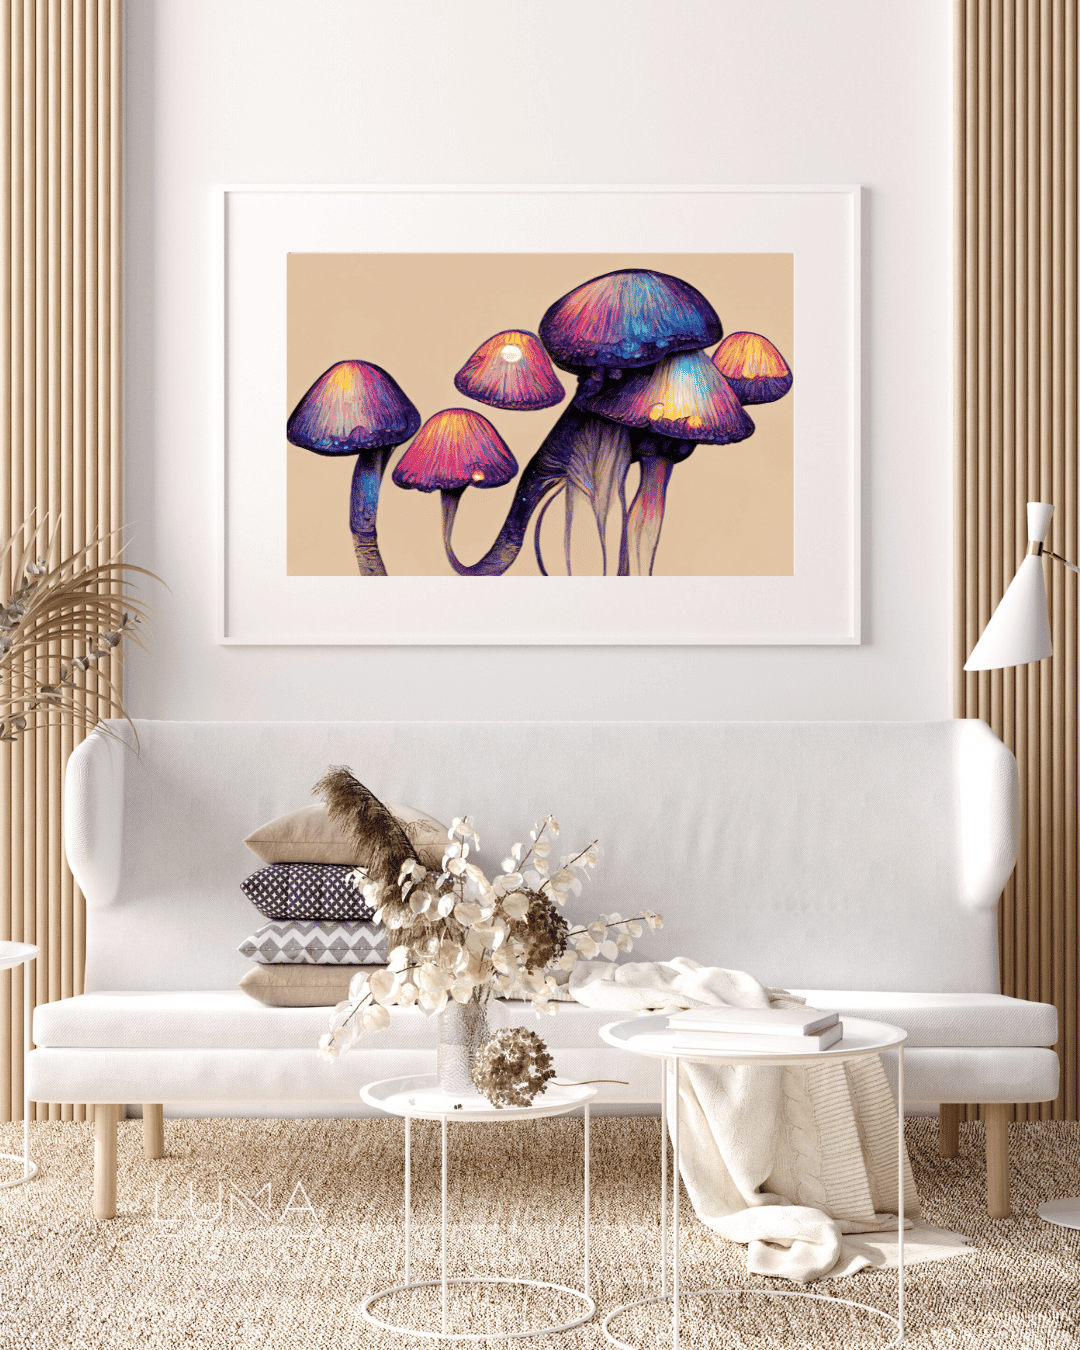 Fabulous Fungi Abstract Artwork